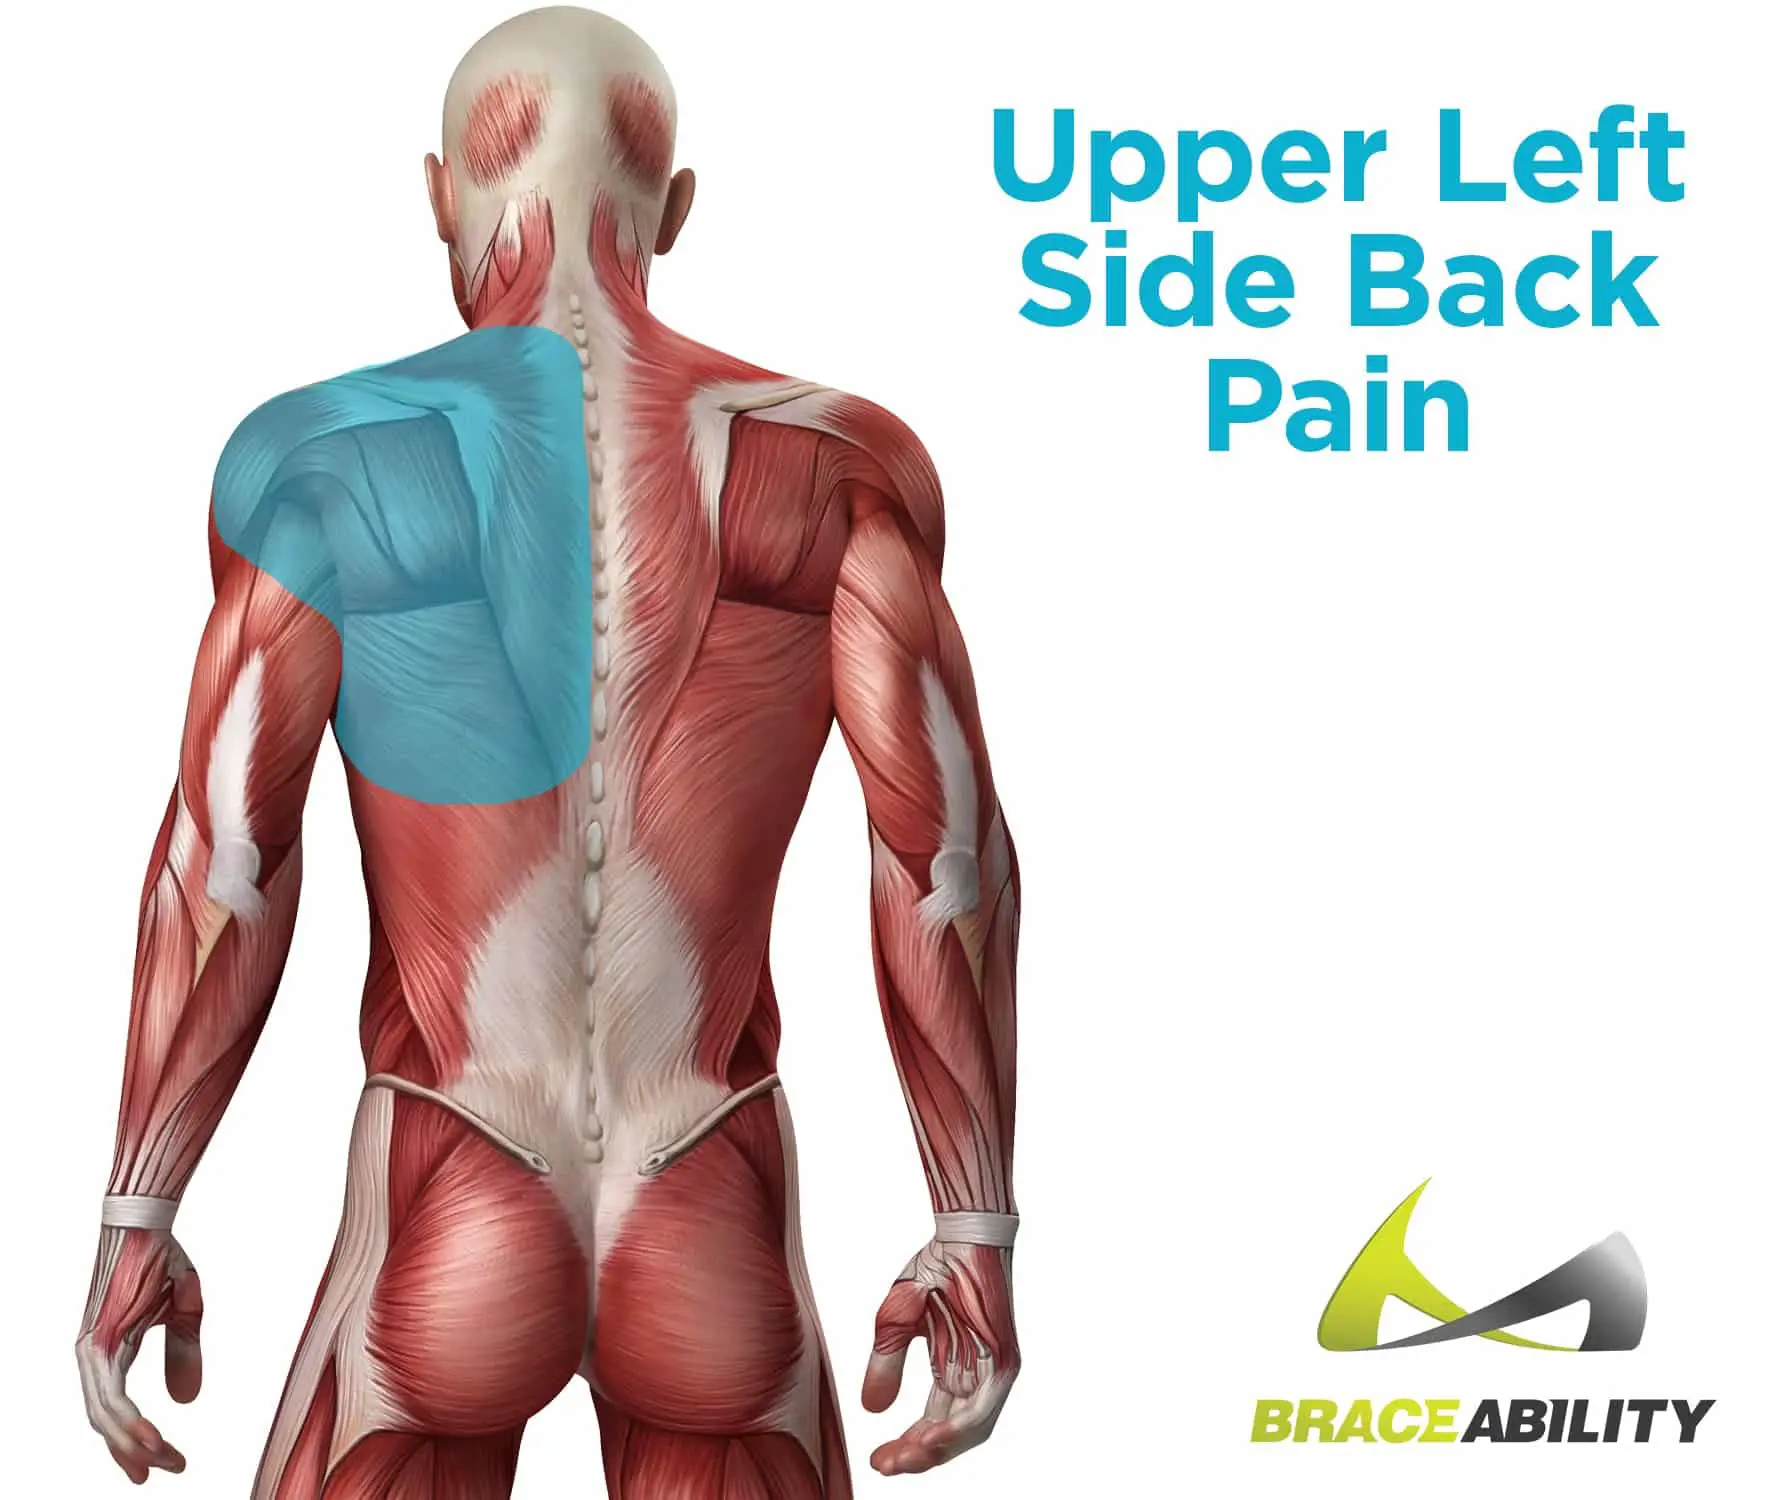 Left Side Lower and Upper Quadrant Back Pain